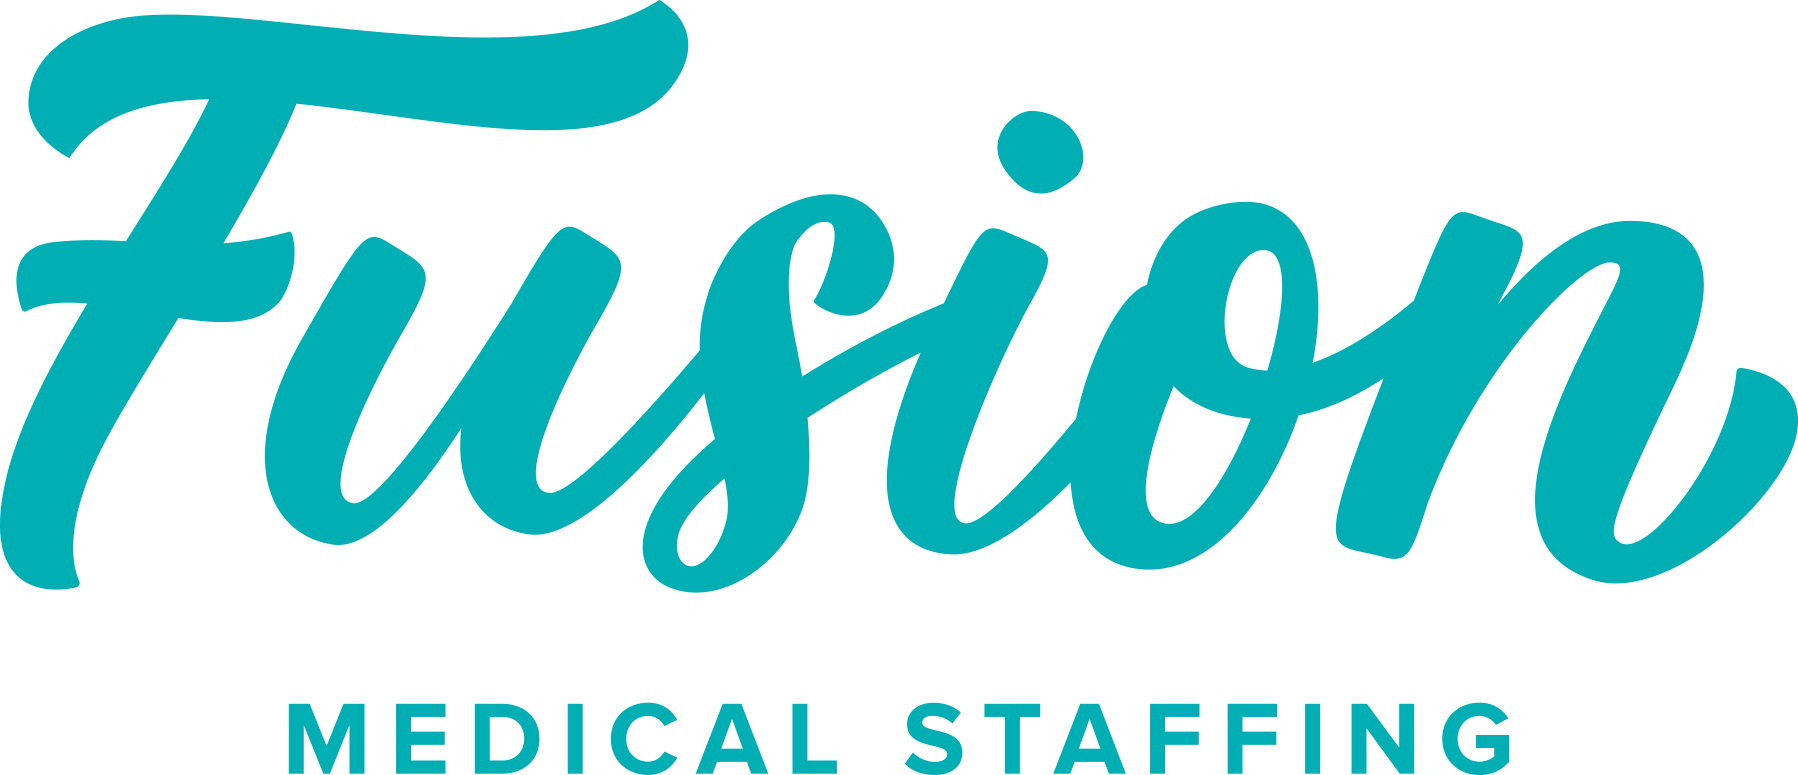 fusion travel nursing